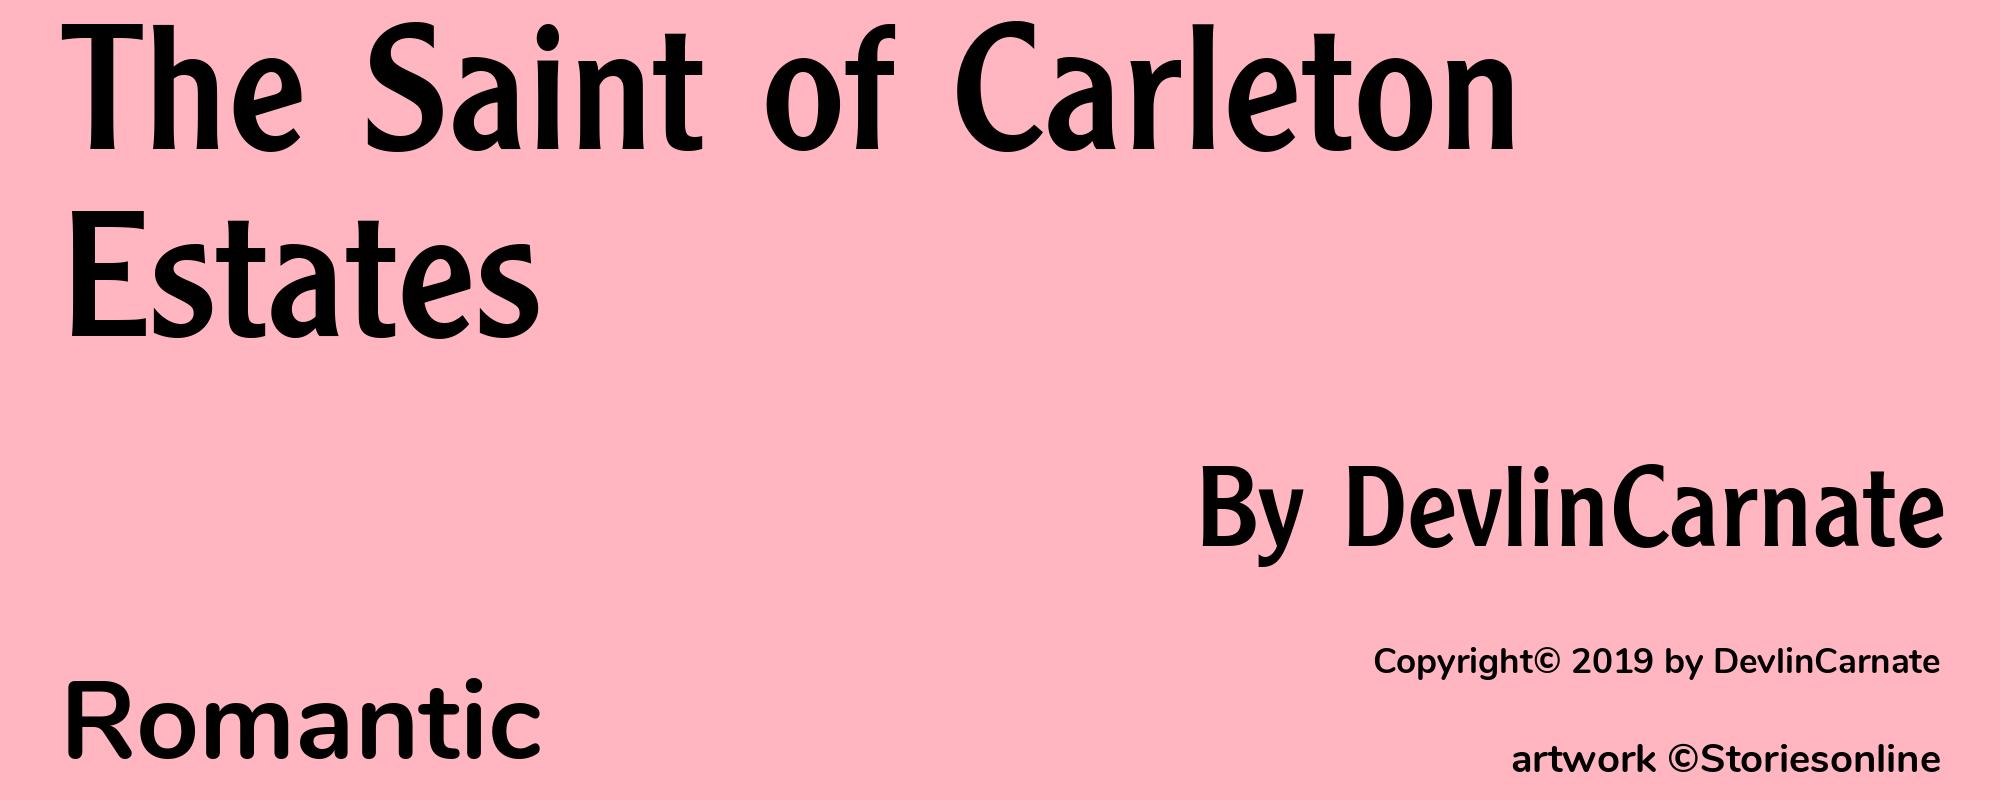 The Saint of Carleton Estates - Cover